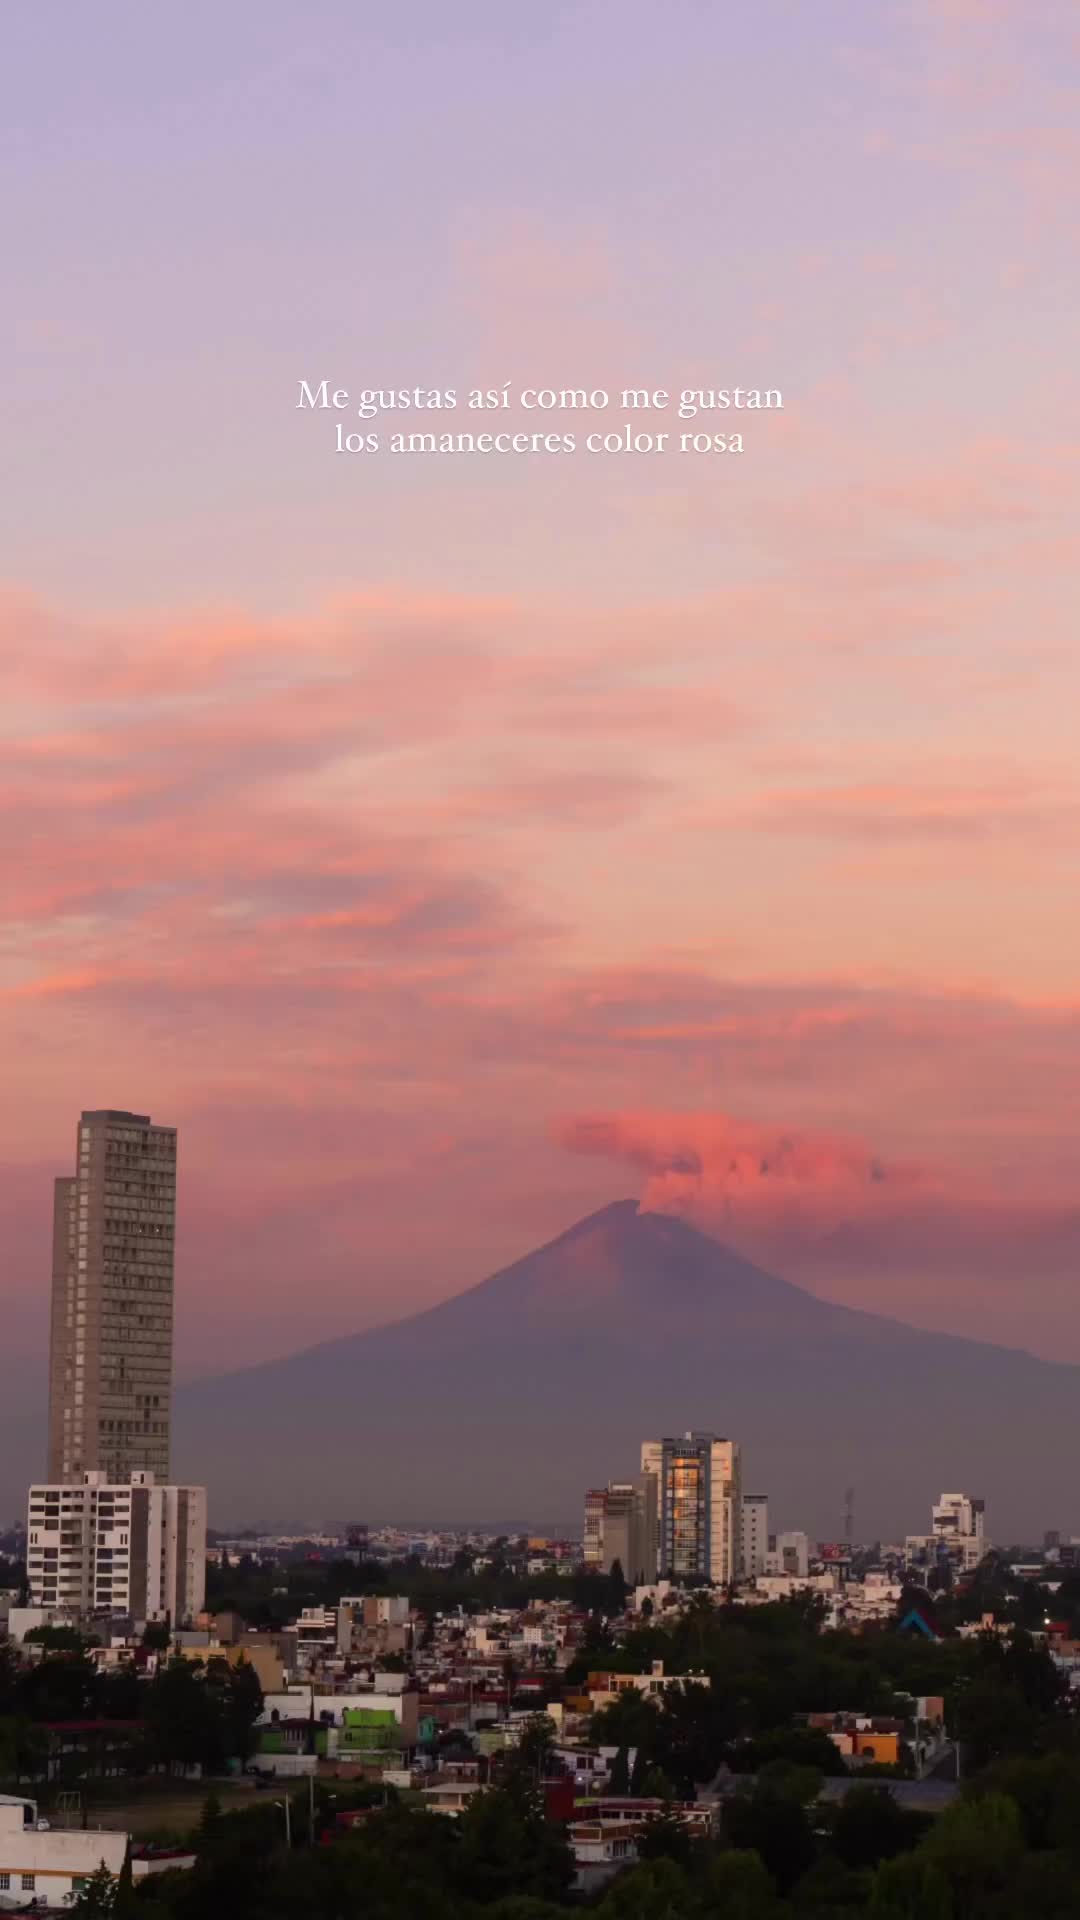 Sunrise in Puebla City: A Breathtaking Horizon